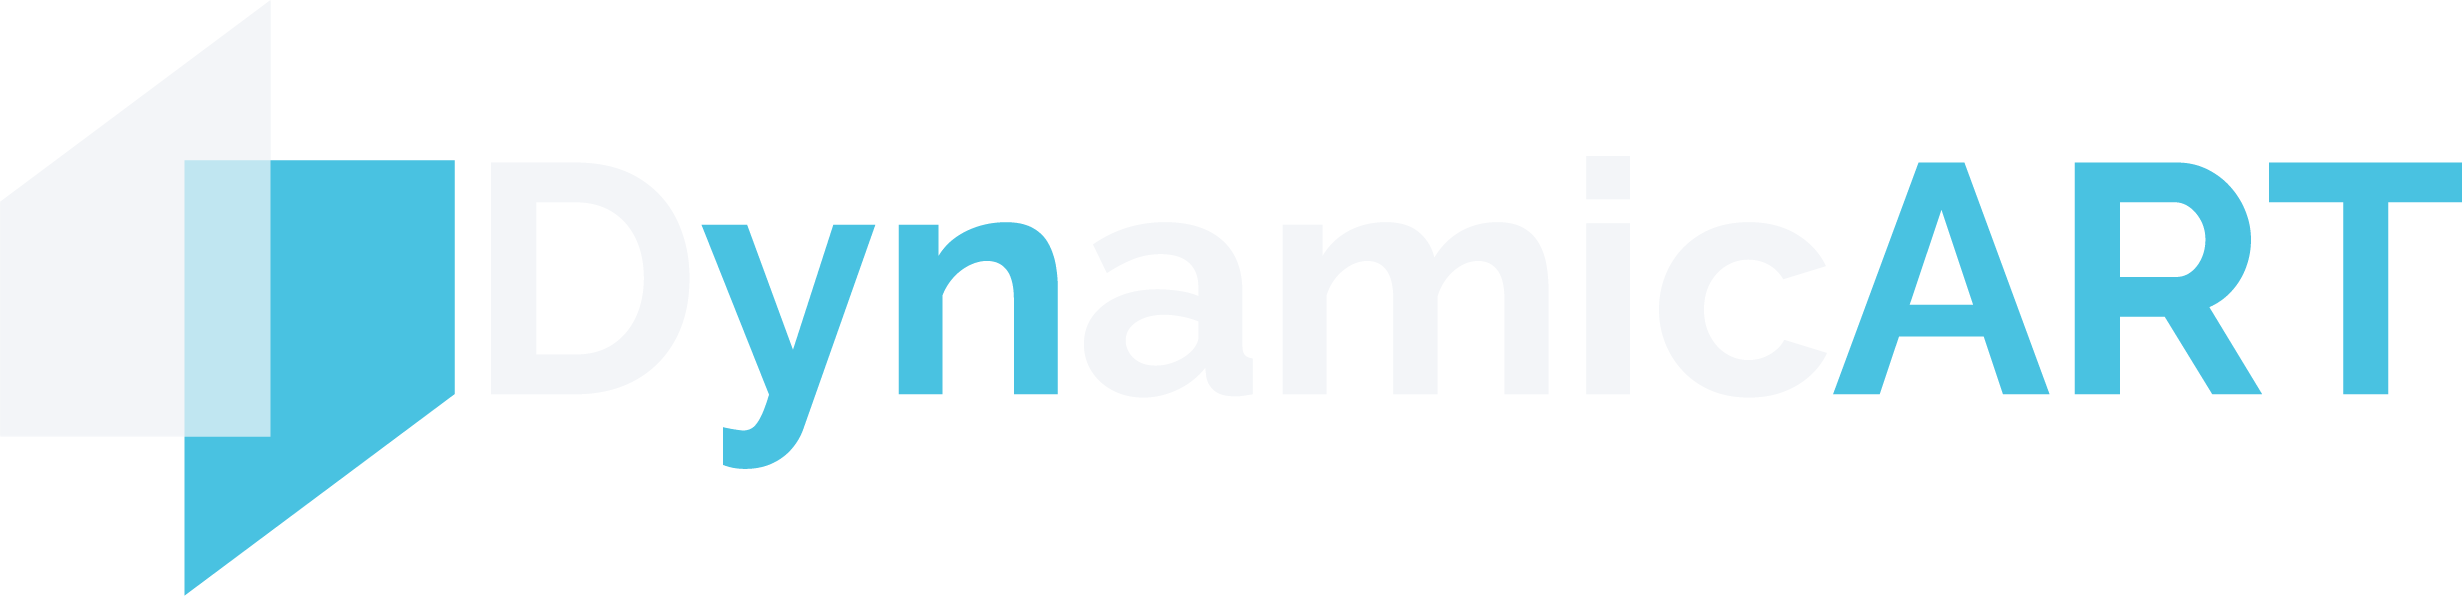 dynamicart logo light